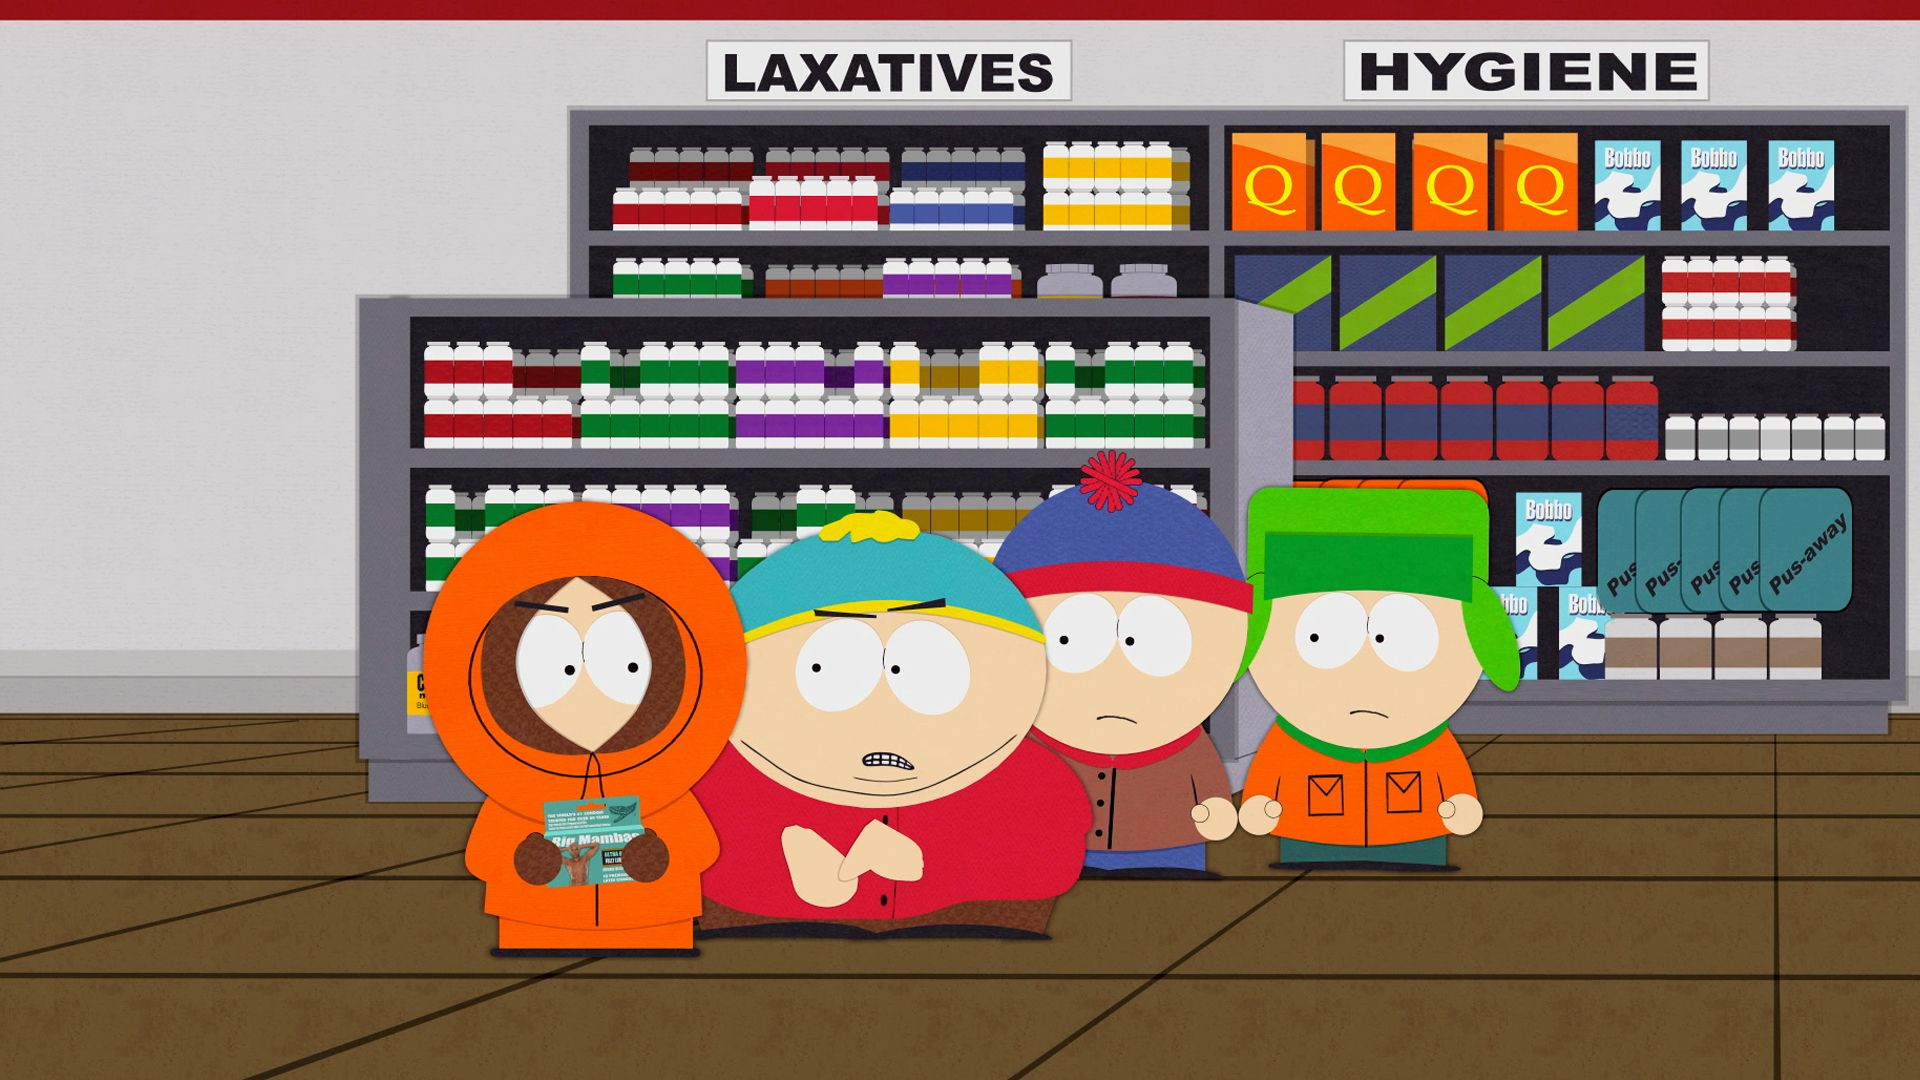 Concert Tickets and Condoms - Season 13 Episode 1 - South Park